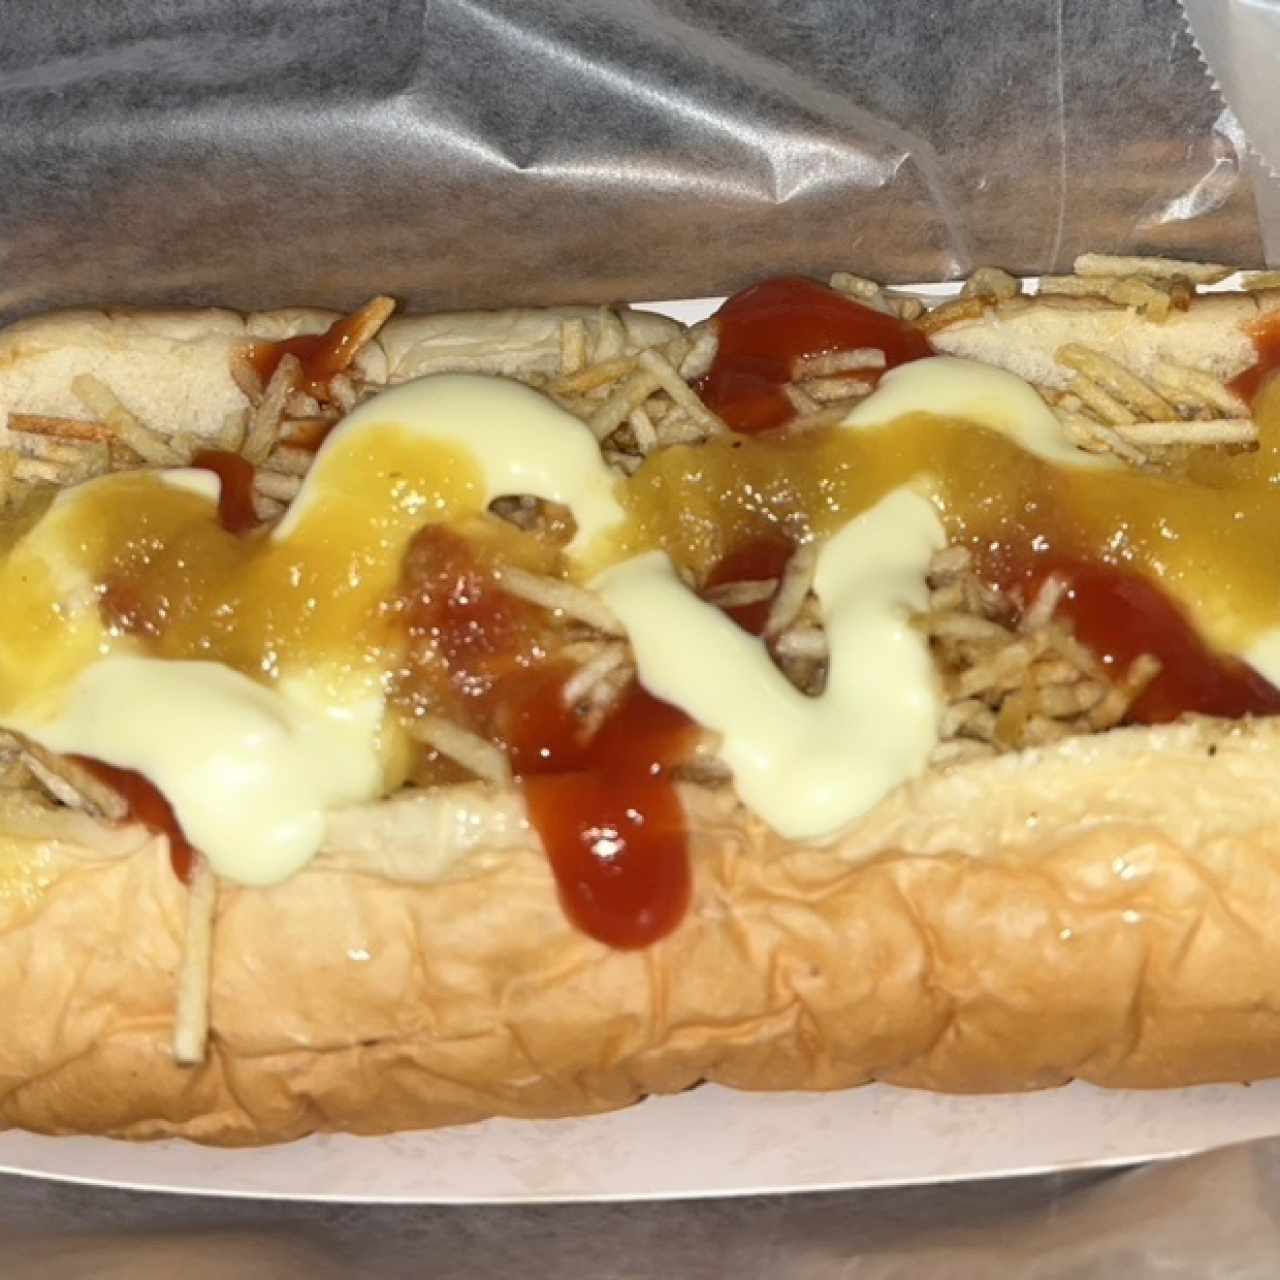 Comida rápida - Hot dog